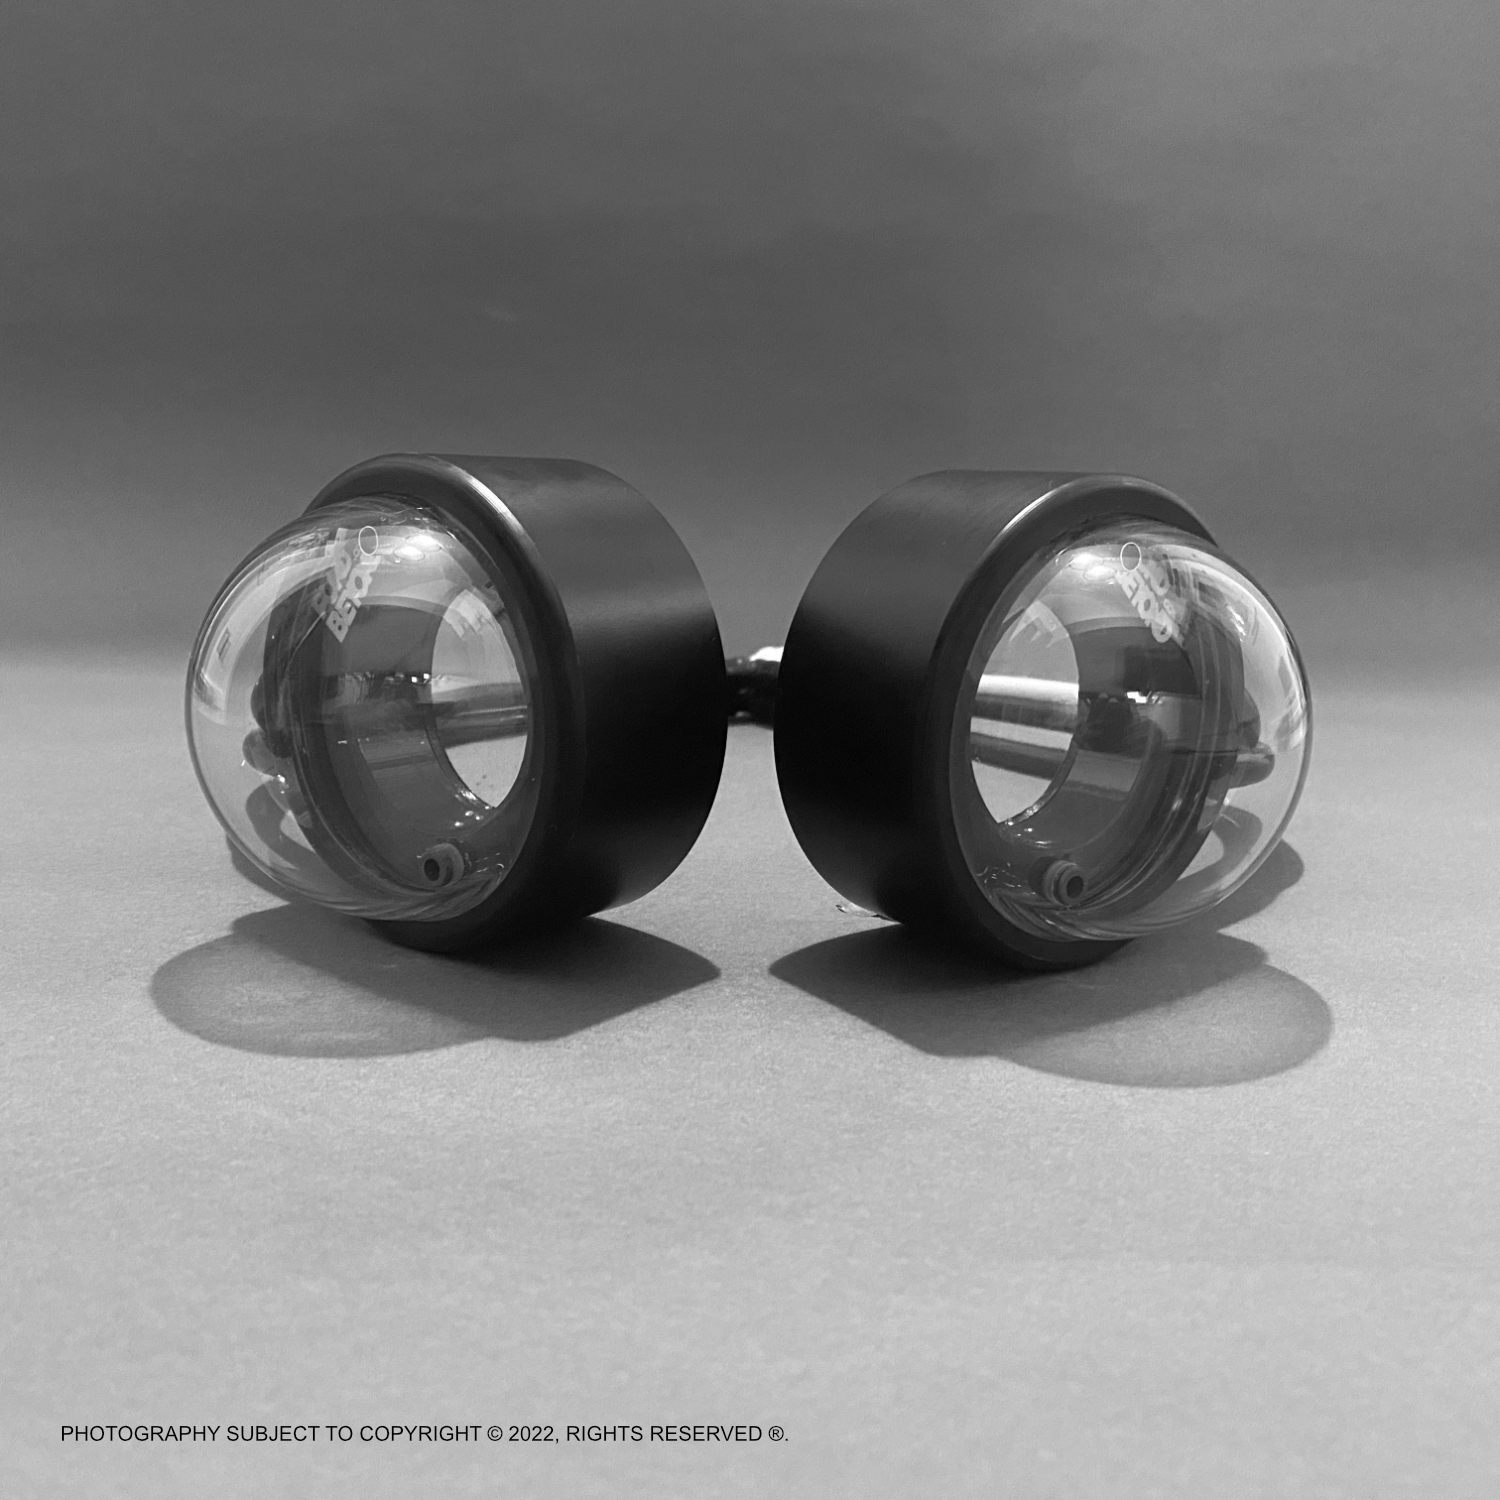 Gas mask 'BUBBLING' liquid dome lenses